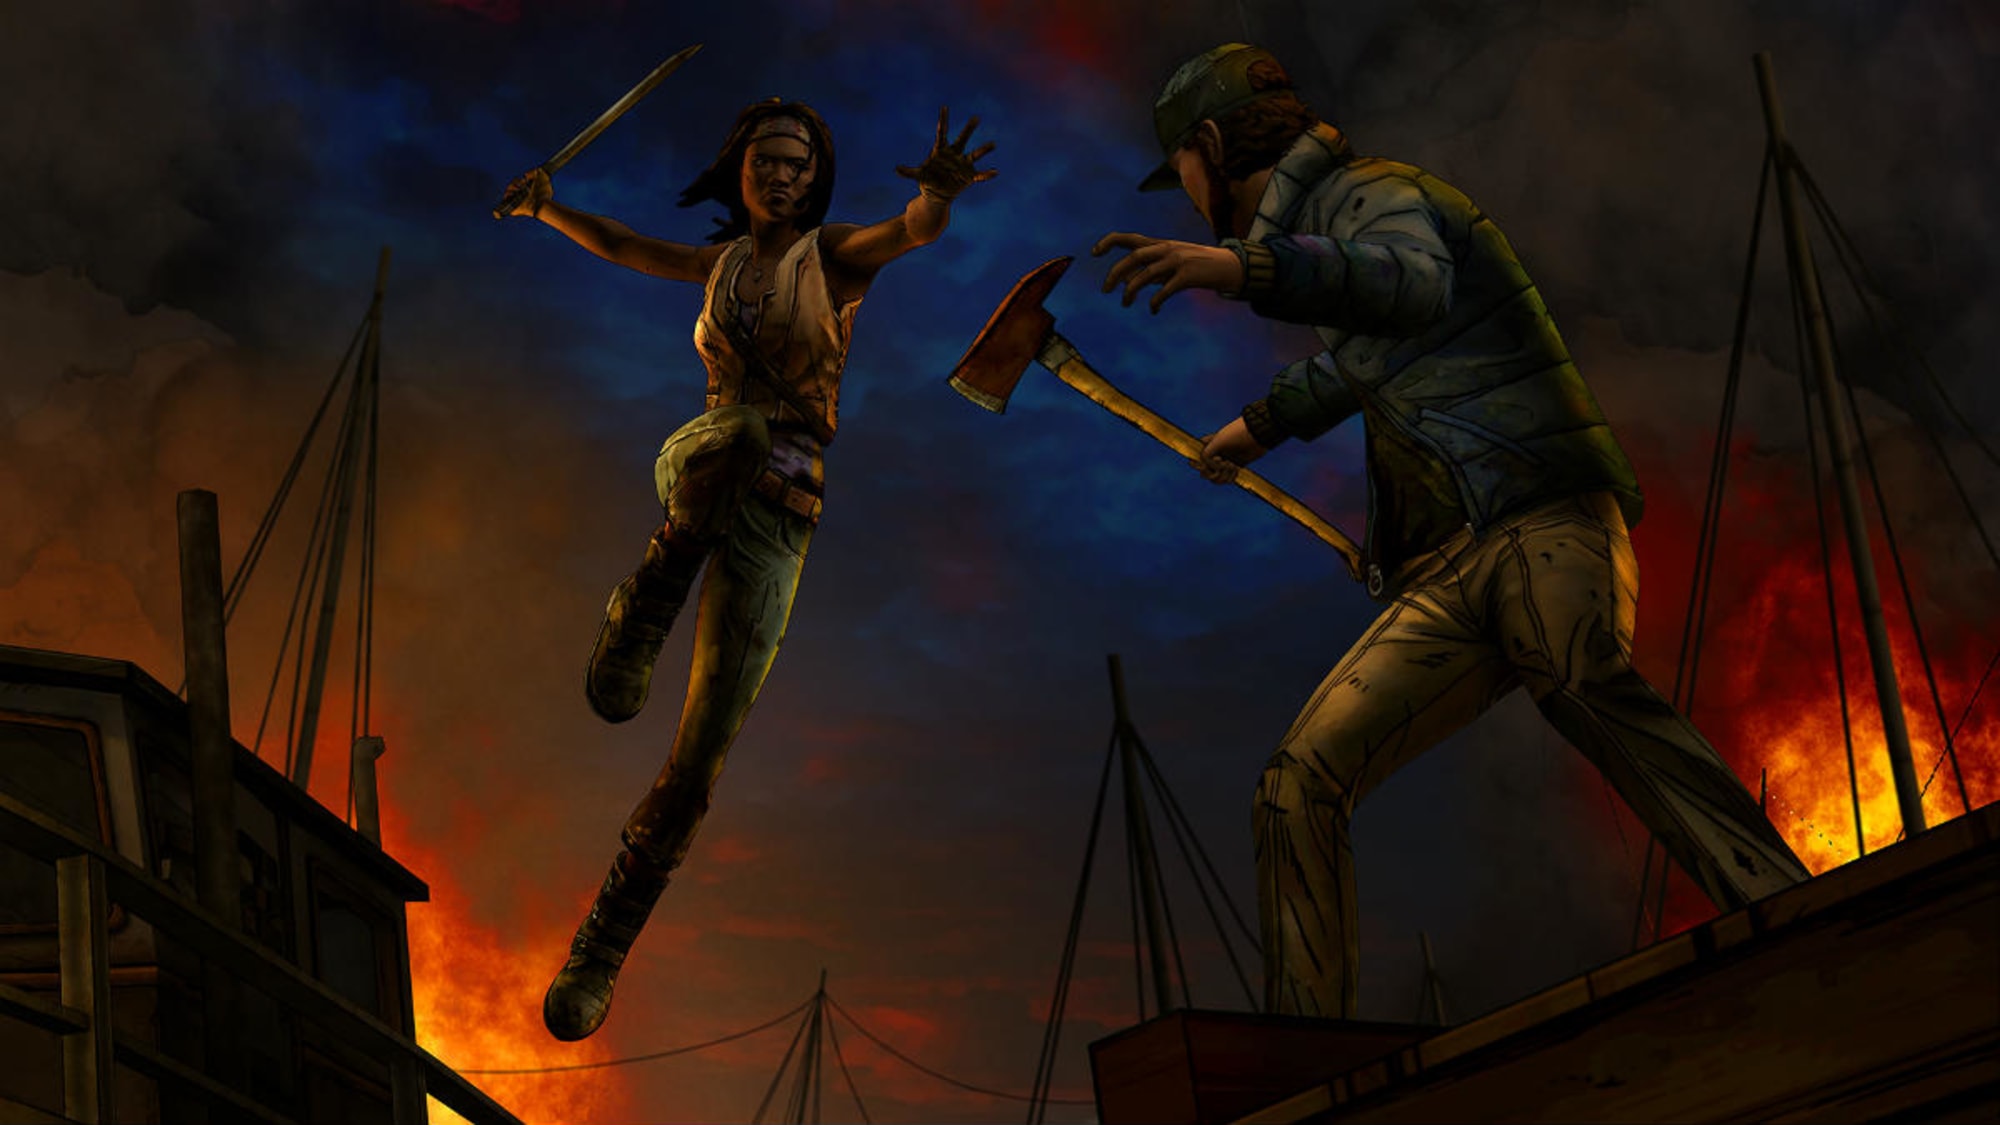 The Walking Dead: Michonne Episode 2 Review